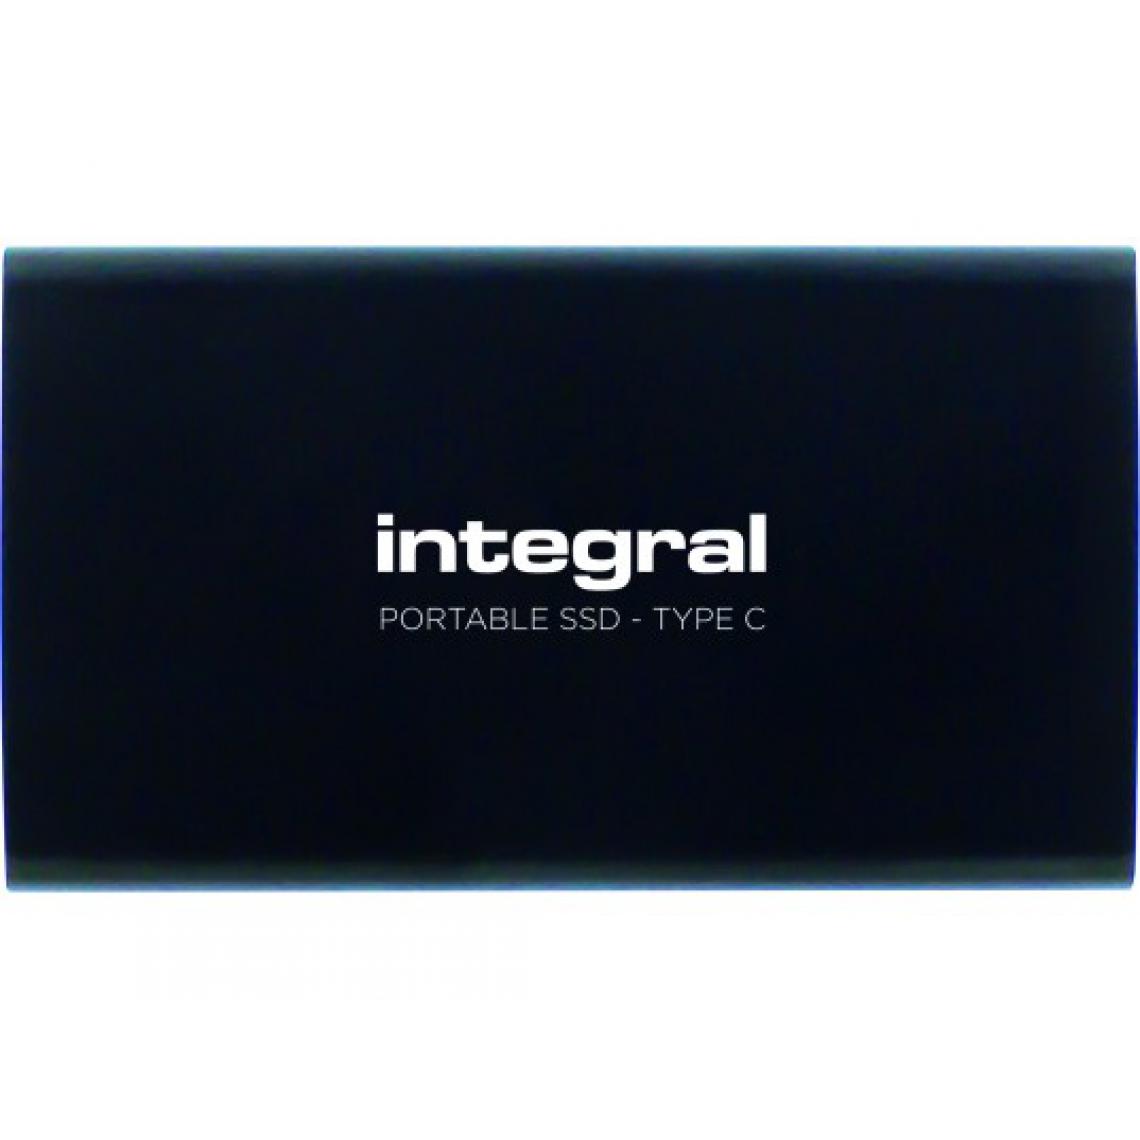 Integral - Disque SSD externe USB 3.1 Portable SSD Type-C - 480 Go INSSD480GPORT - Disque Dur interne